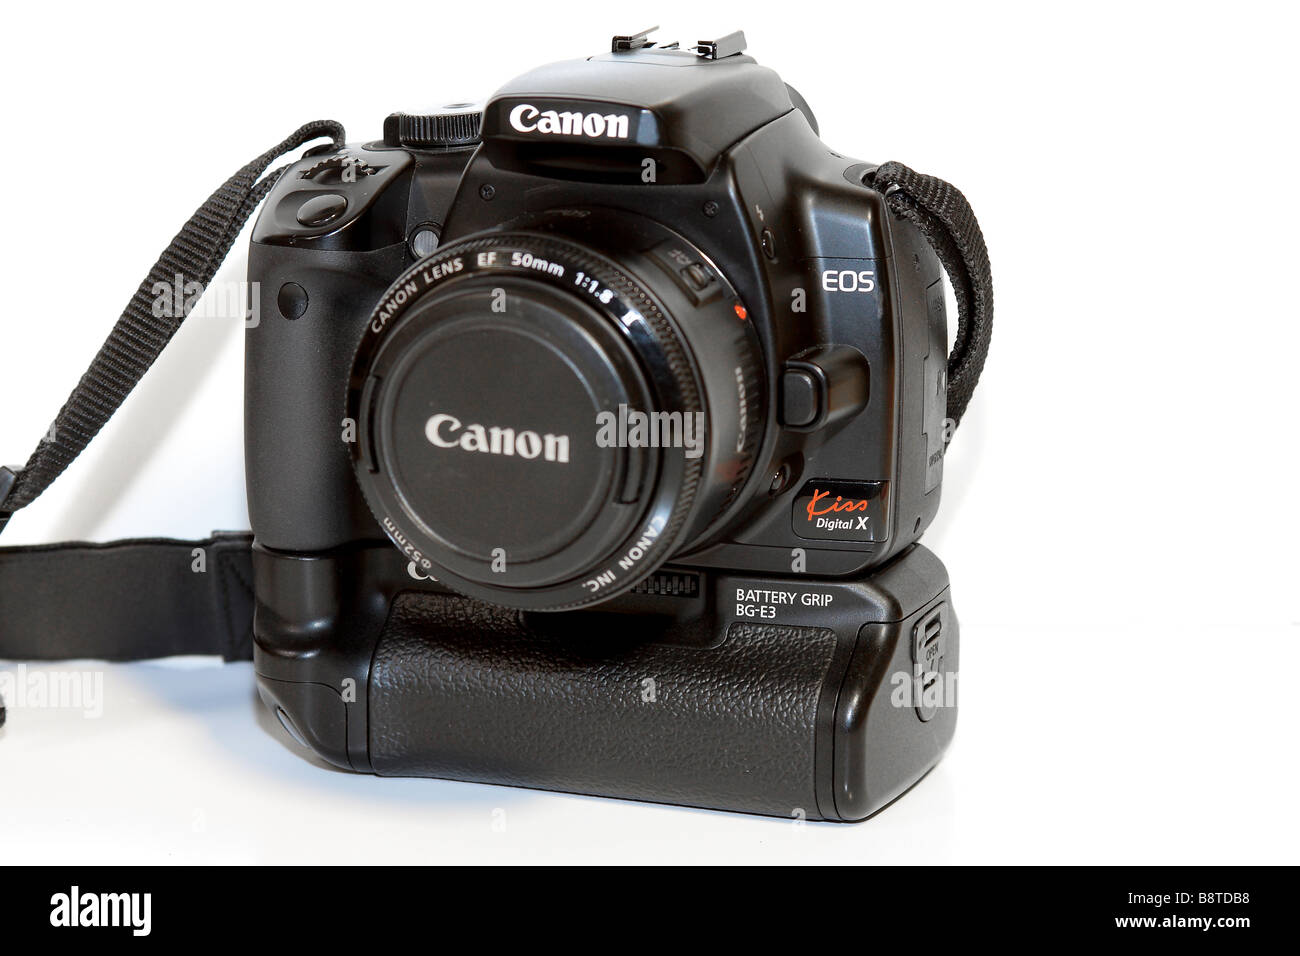 Canon Camera Kiss X, BG-E3 Battery grip, 50mm lens 'Front View' Stock Photo